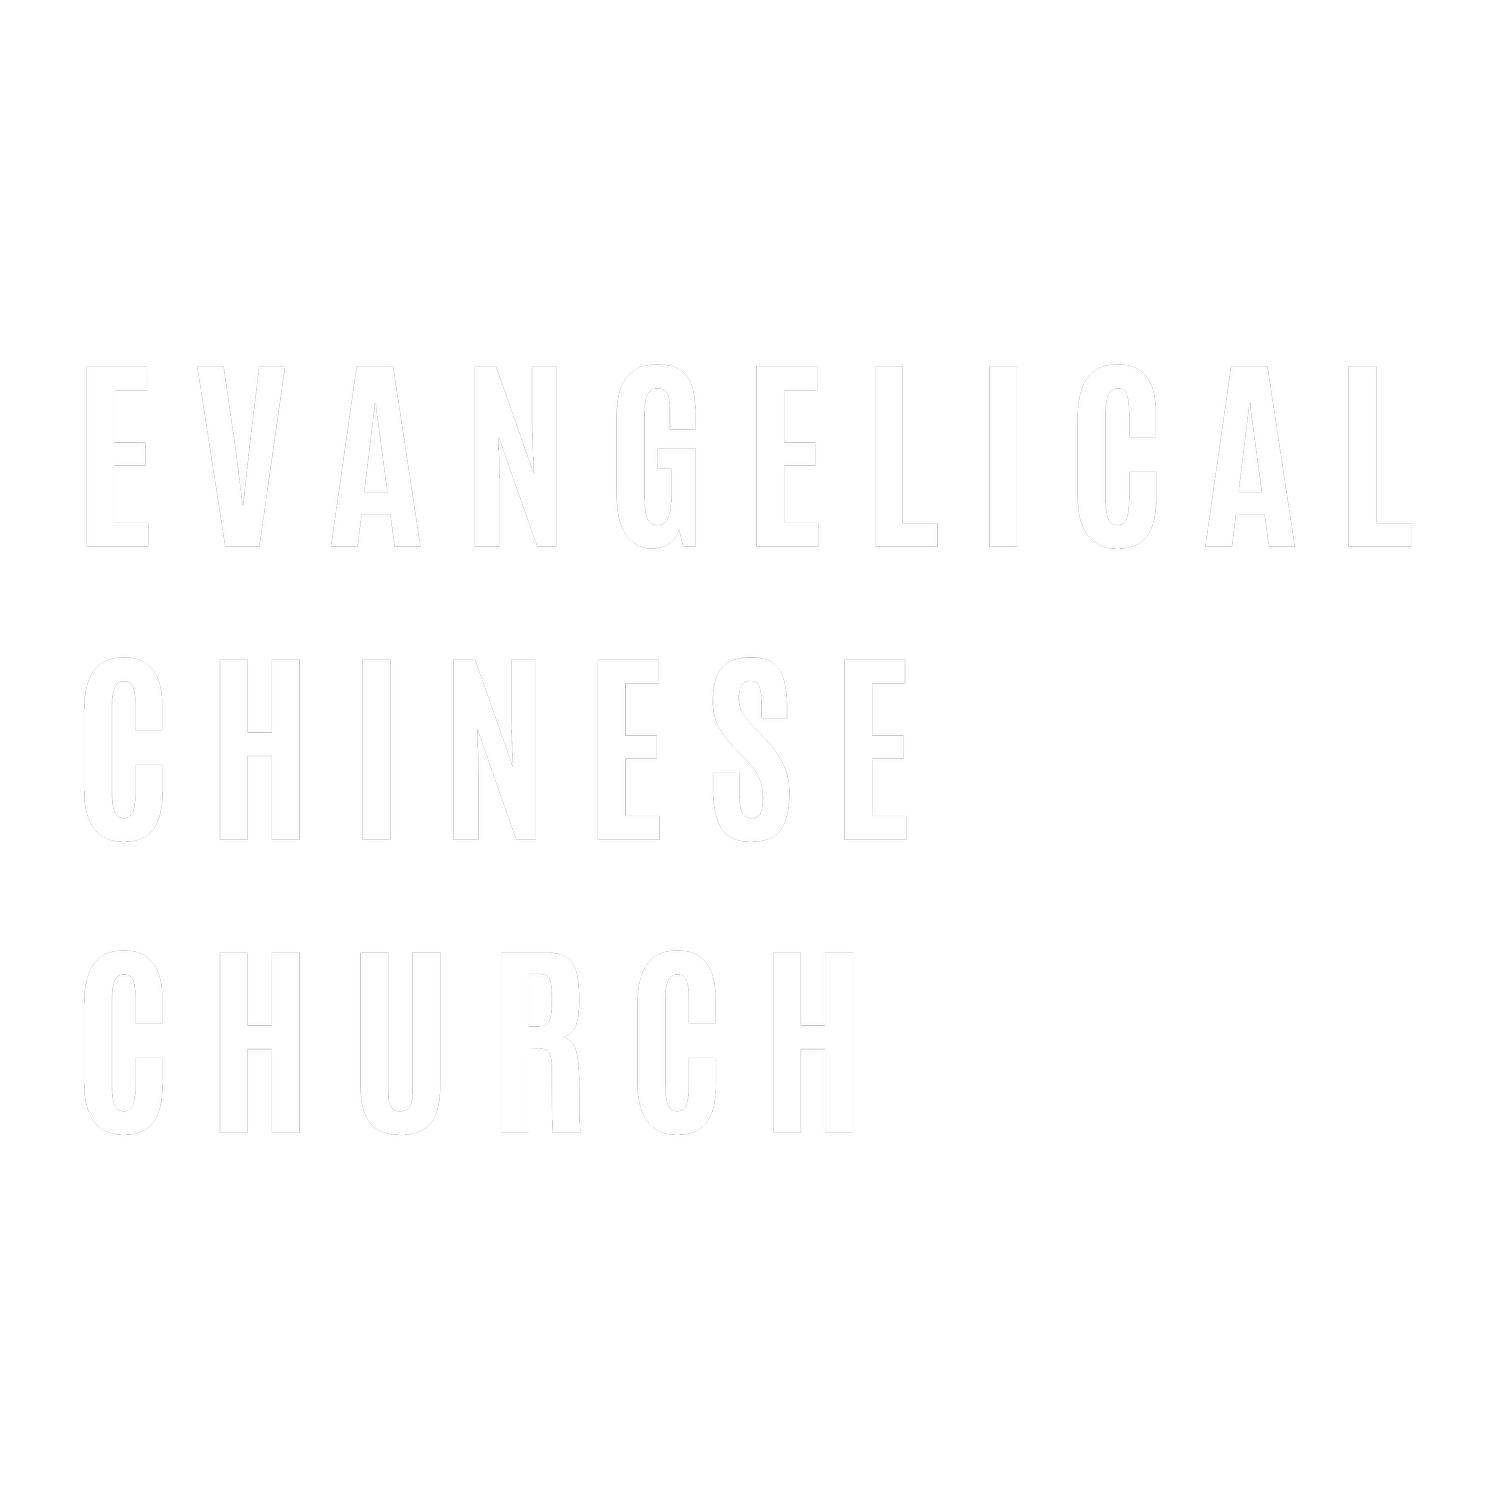 EVANGELICAL CHINESE CHURCH